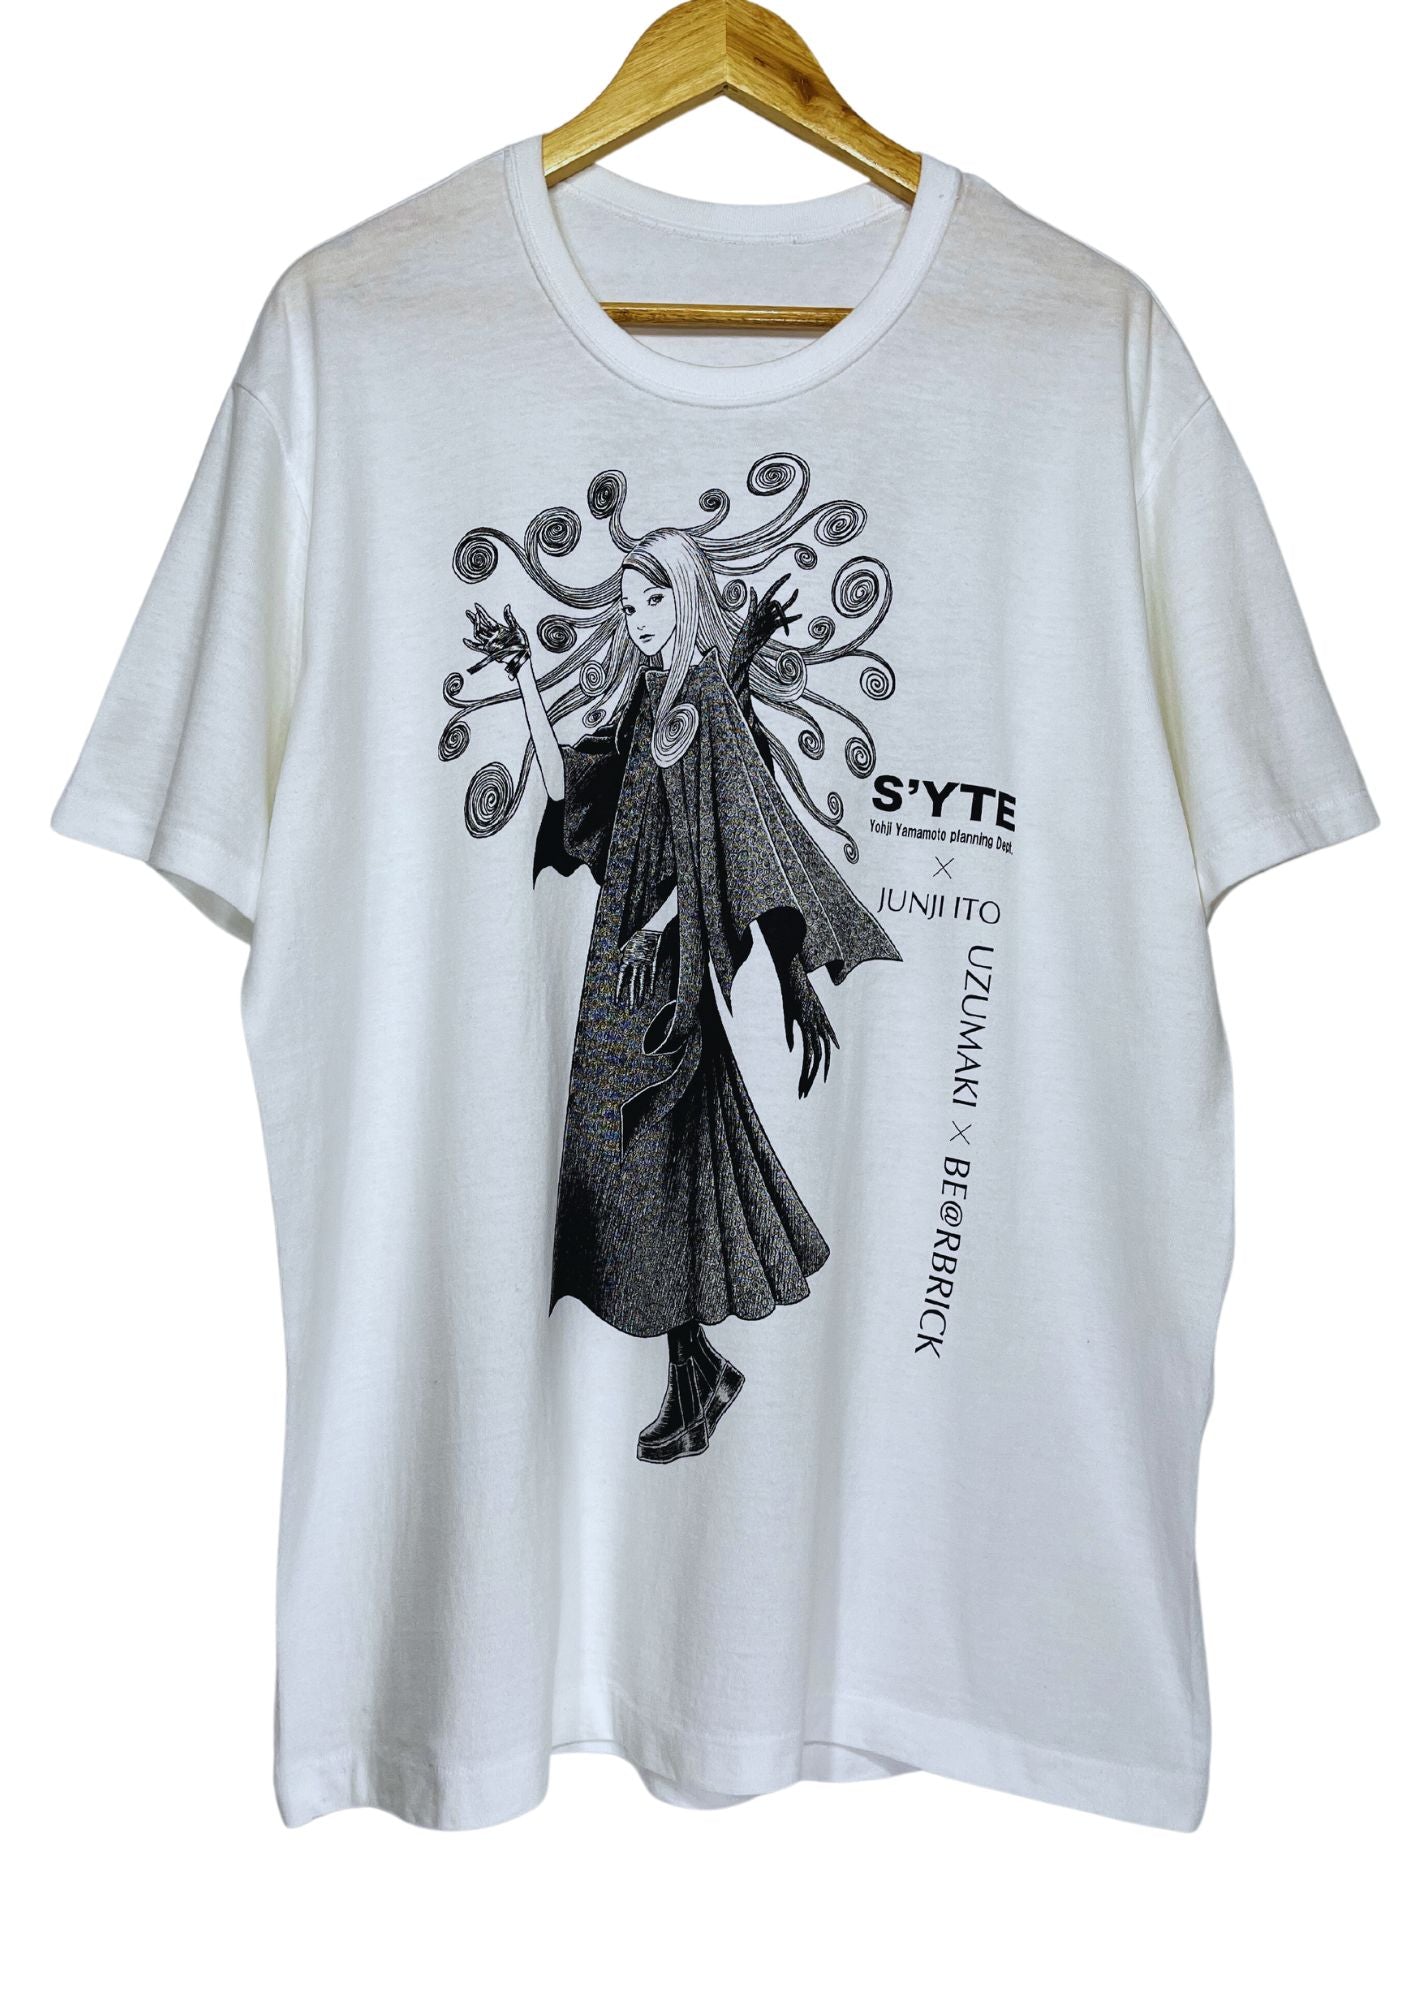 Junji Ito x S'YTE Yohji Yamamoto x Be@rbrick Uzumaki T-shirt